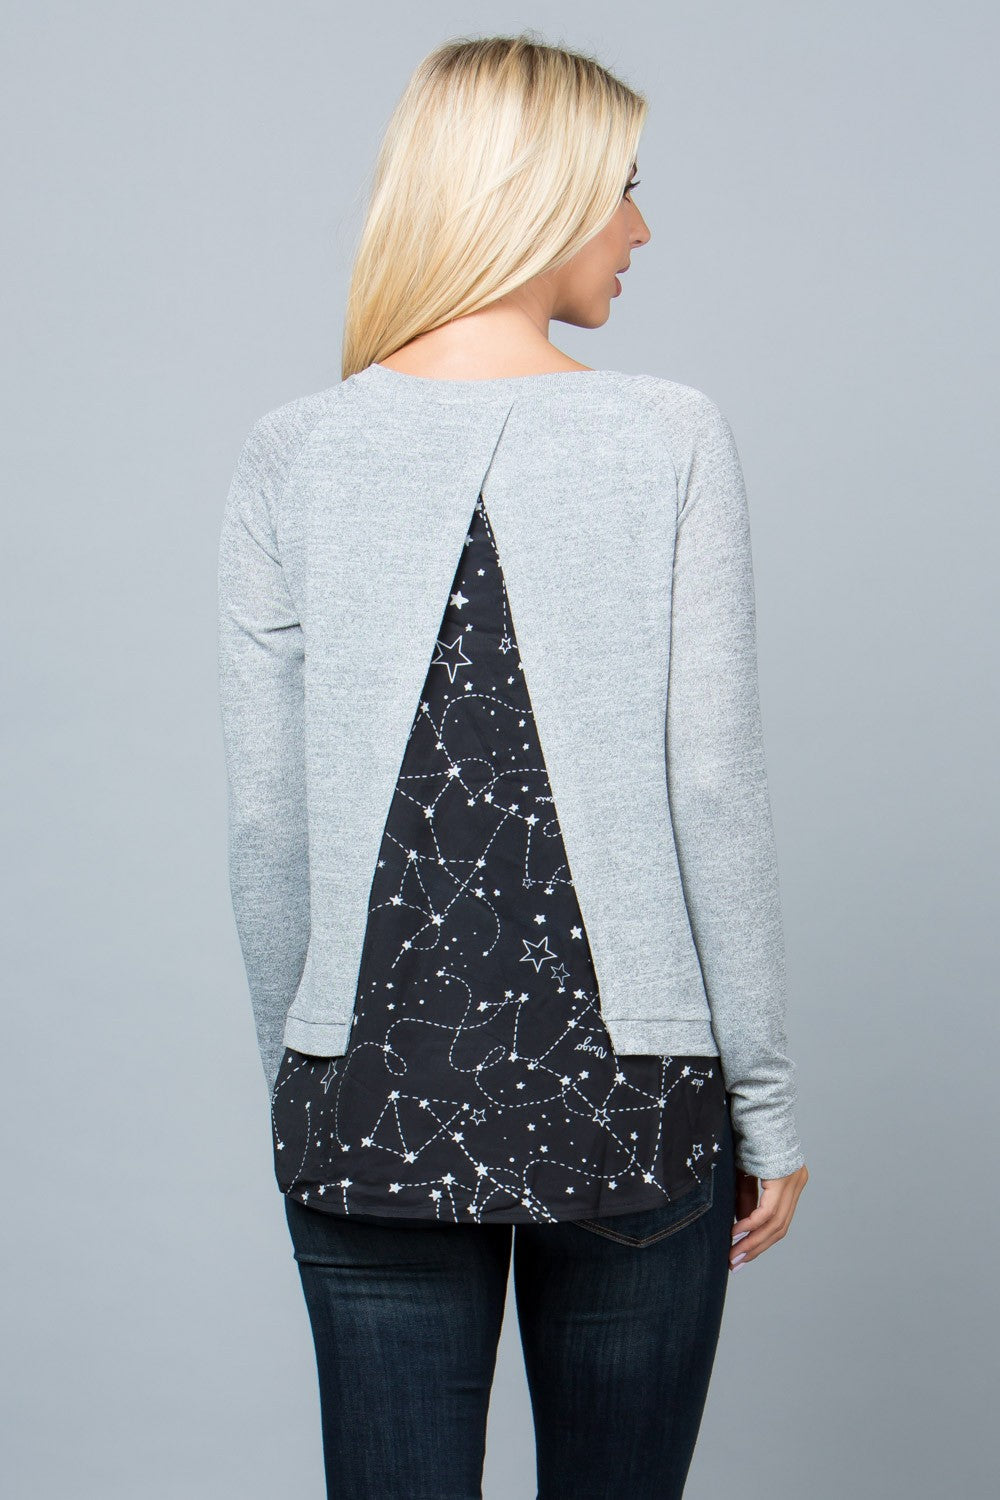 Celestial Print Sweater Top